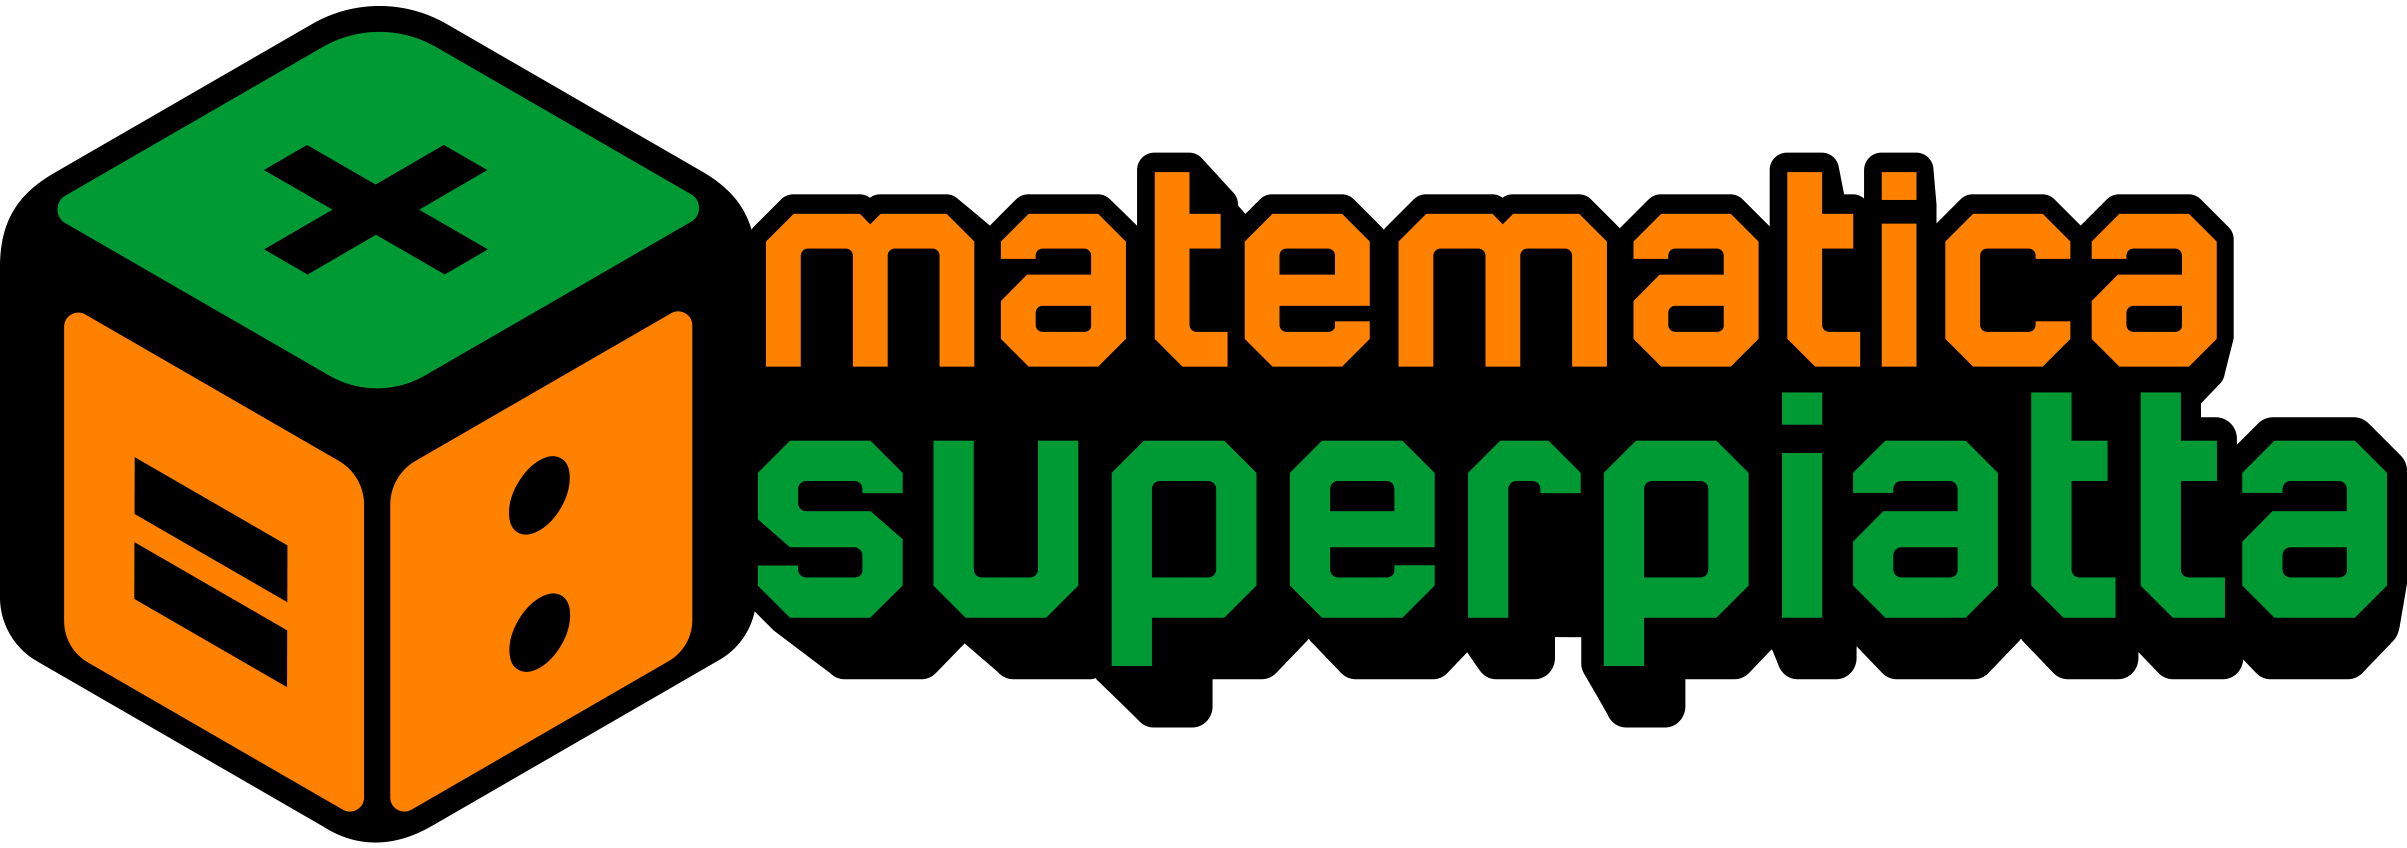 Matematica Superpiatta